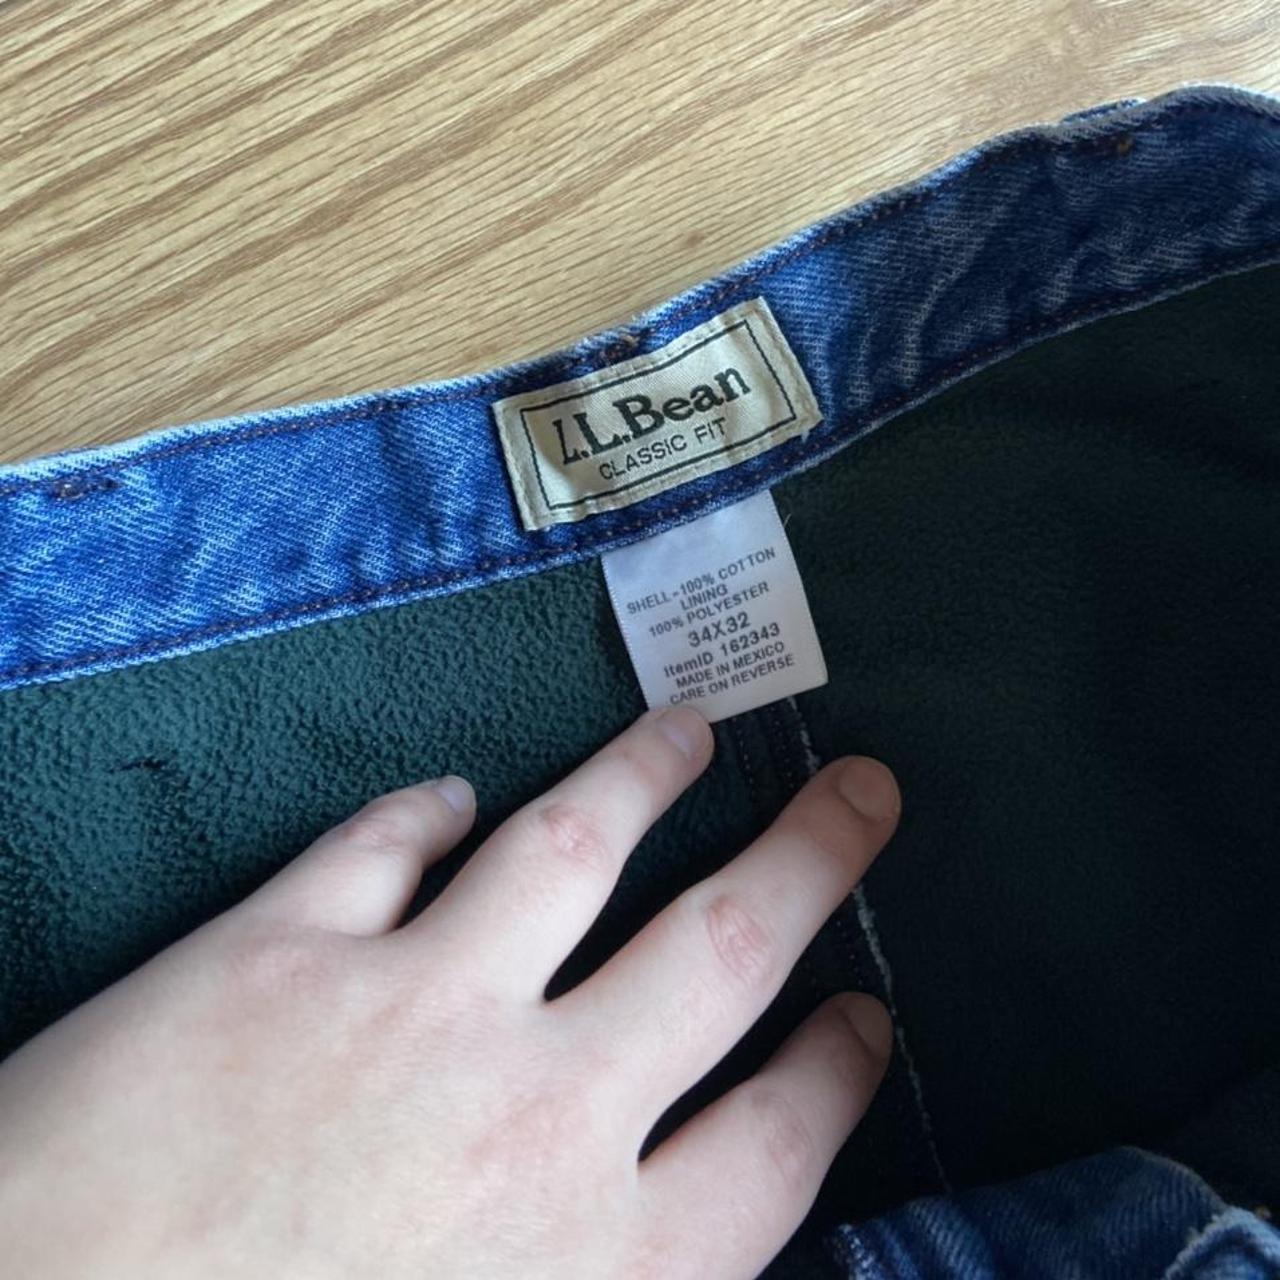 L.L. Beans Classic Fit green fleece lined jeans -... - Depop